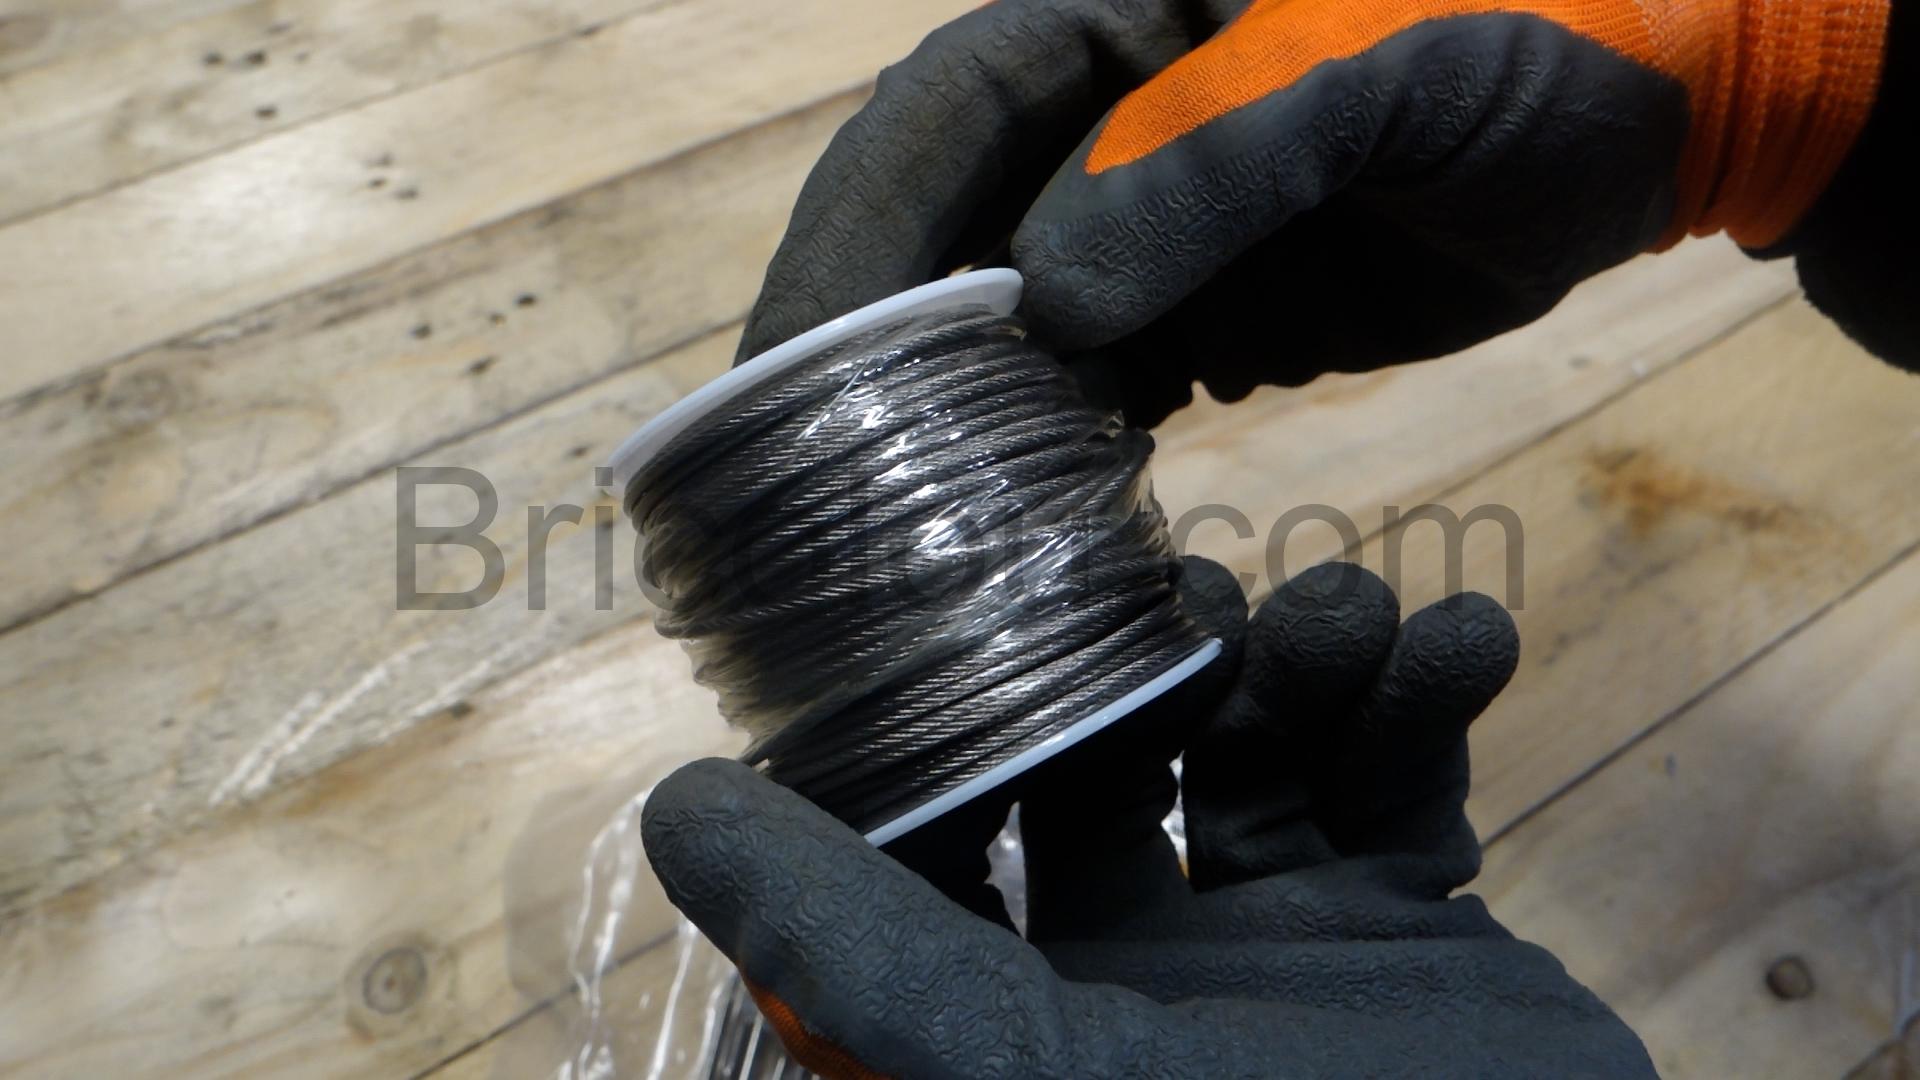 Kit fixation câble acier inox diamètre 1.5 mm